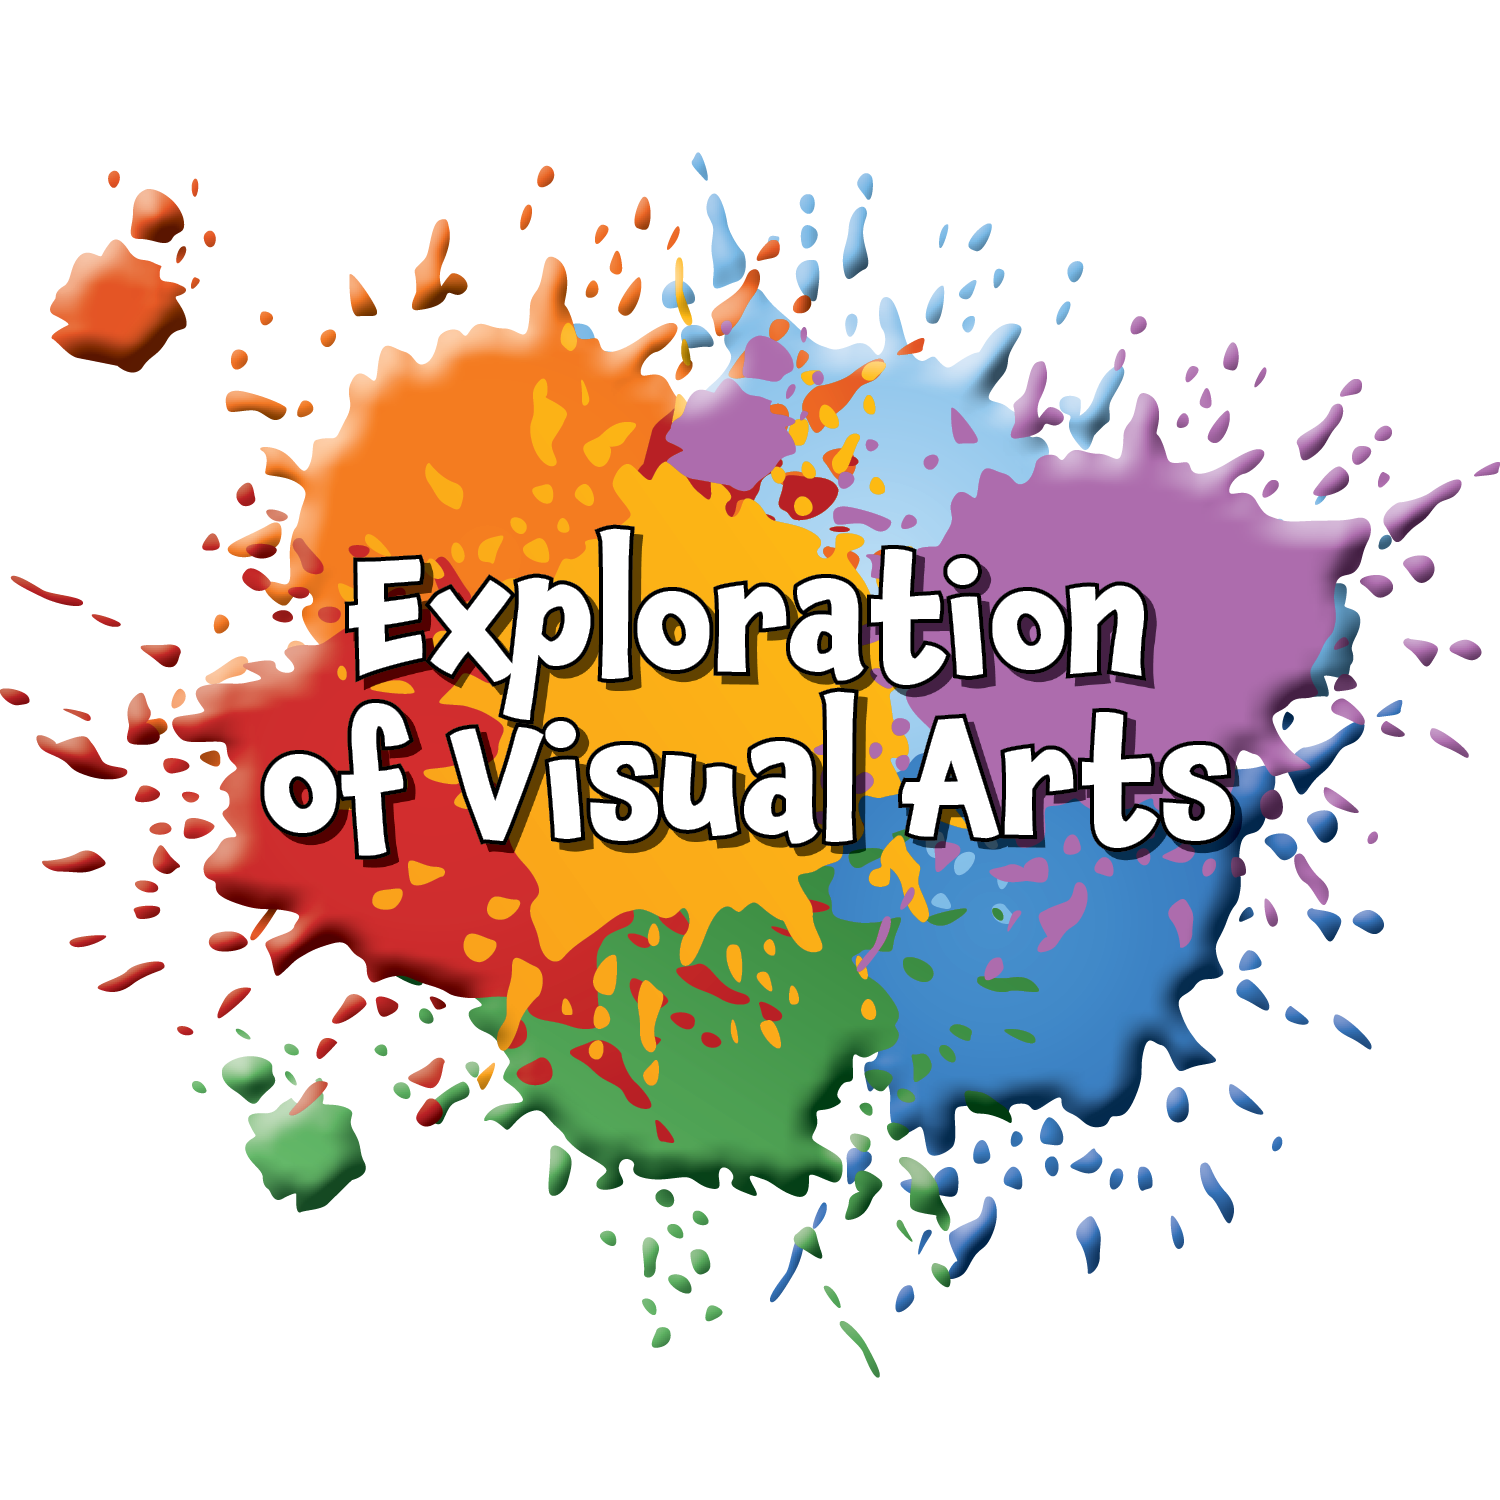 Exploration of Visual Arts